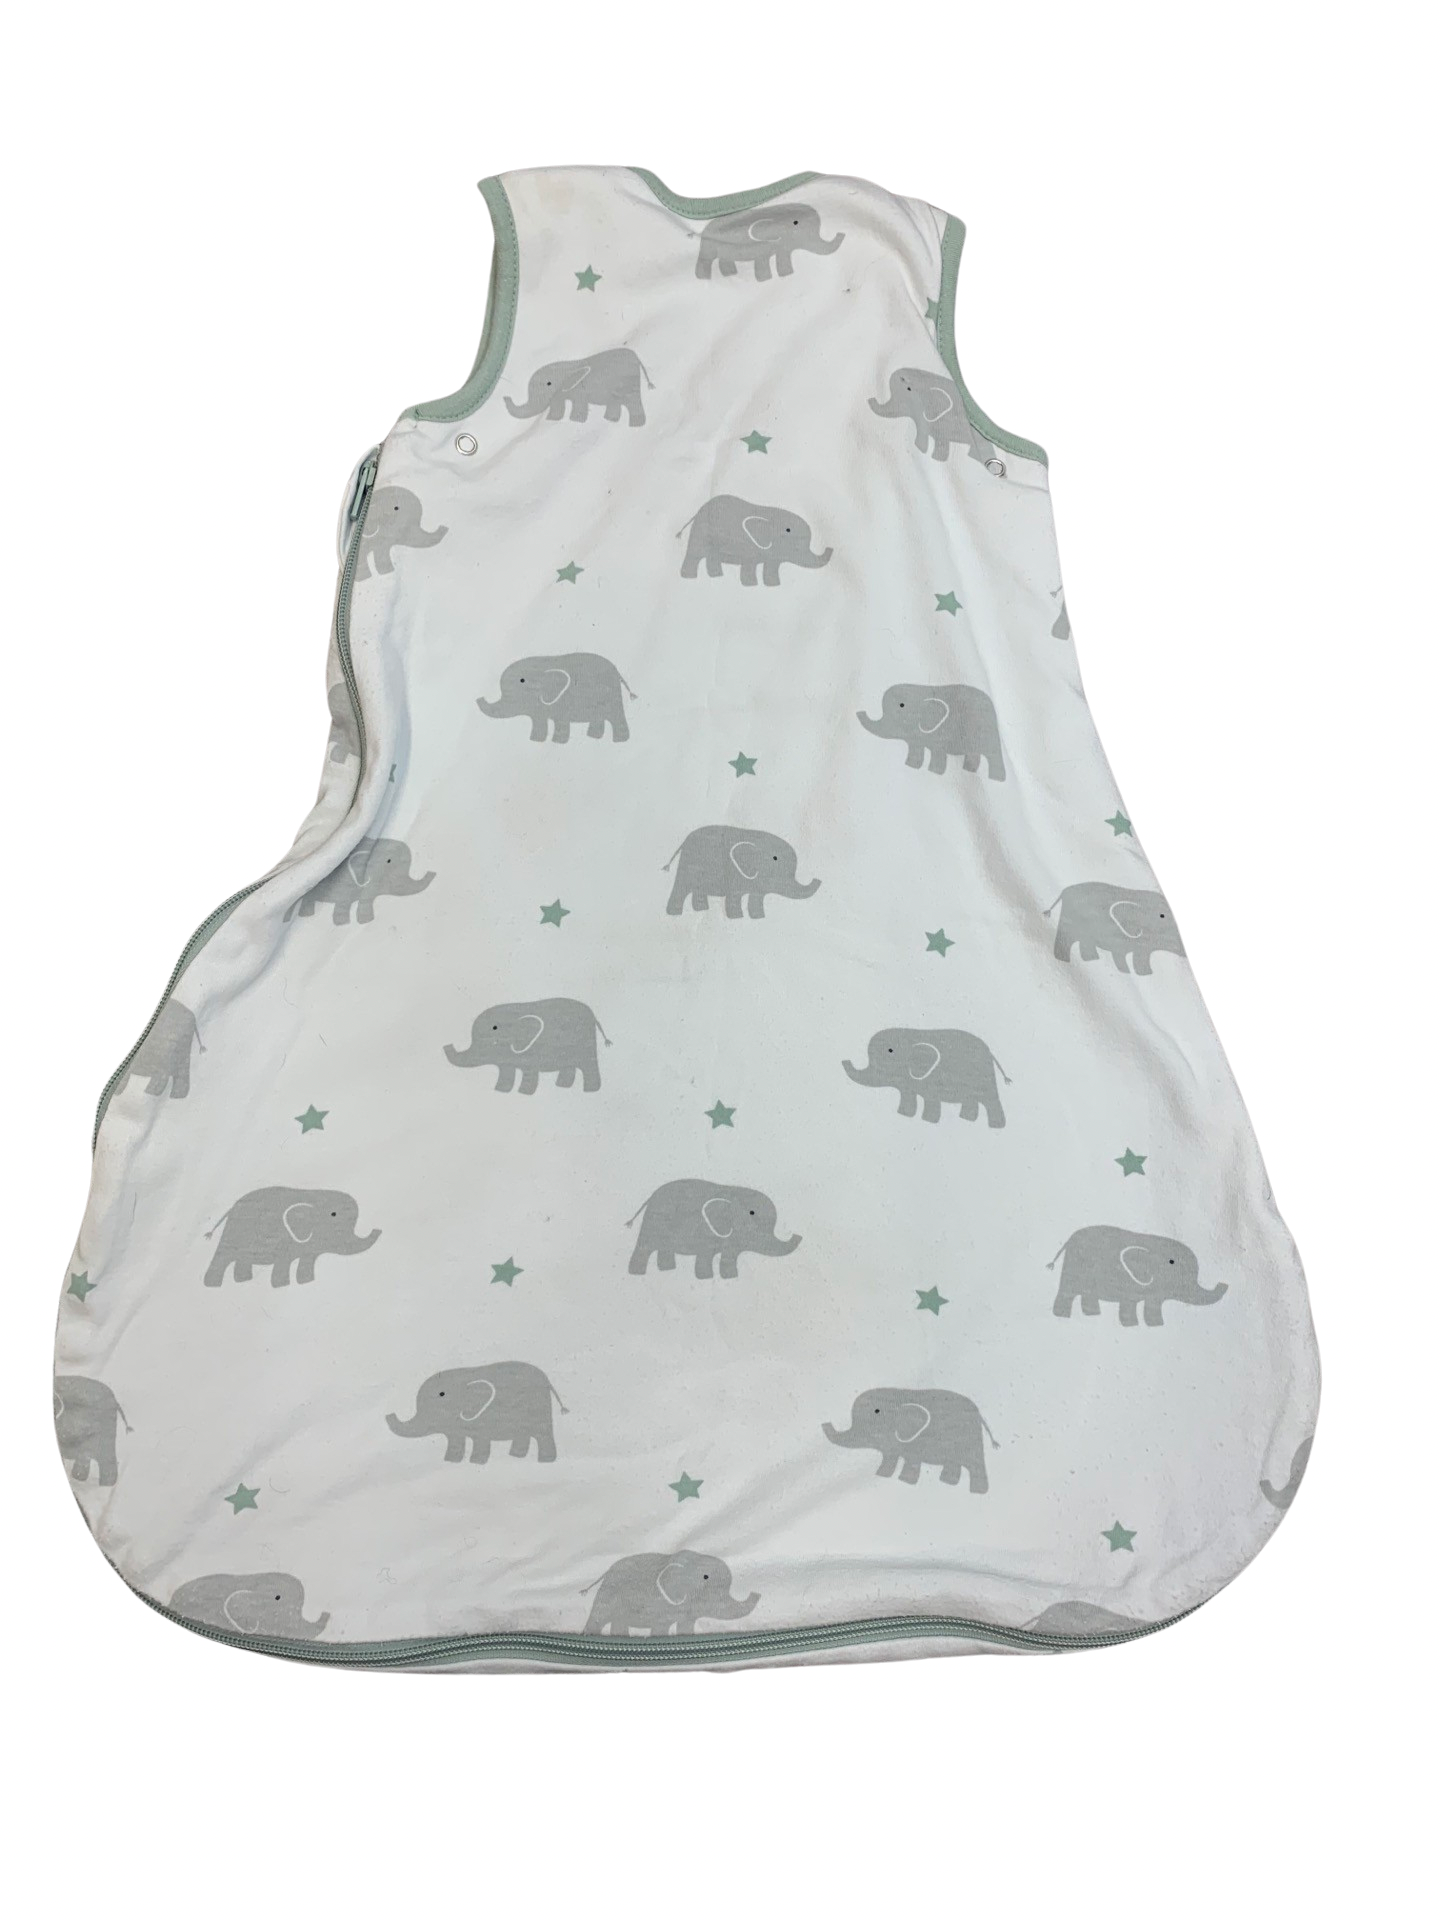 Lily & Dan Elephant Printed Sleeping Bag 0-6 Months/50-65cm 1TOG